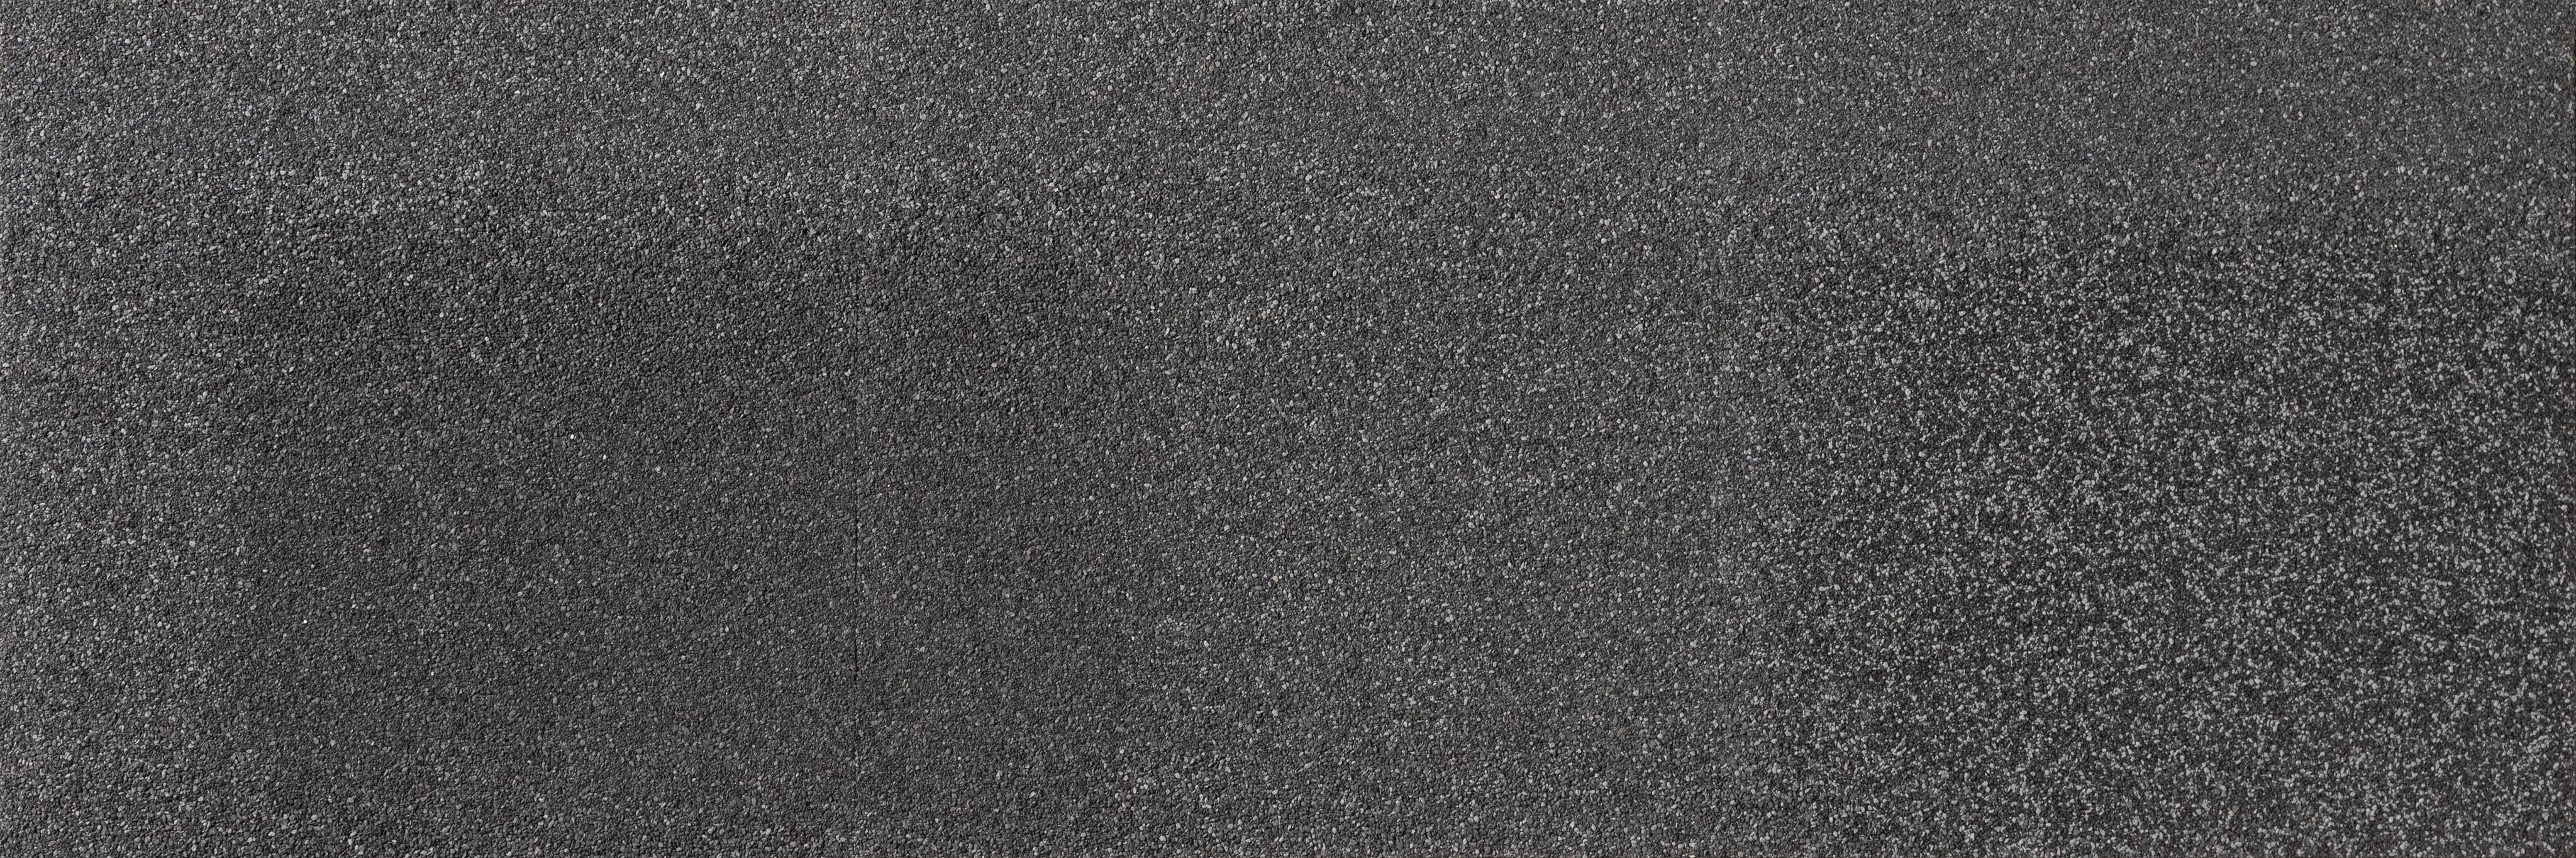 Конек-карниз Quiet tile Brick 16.8/20м.п, серый